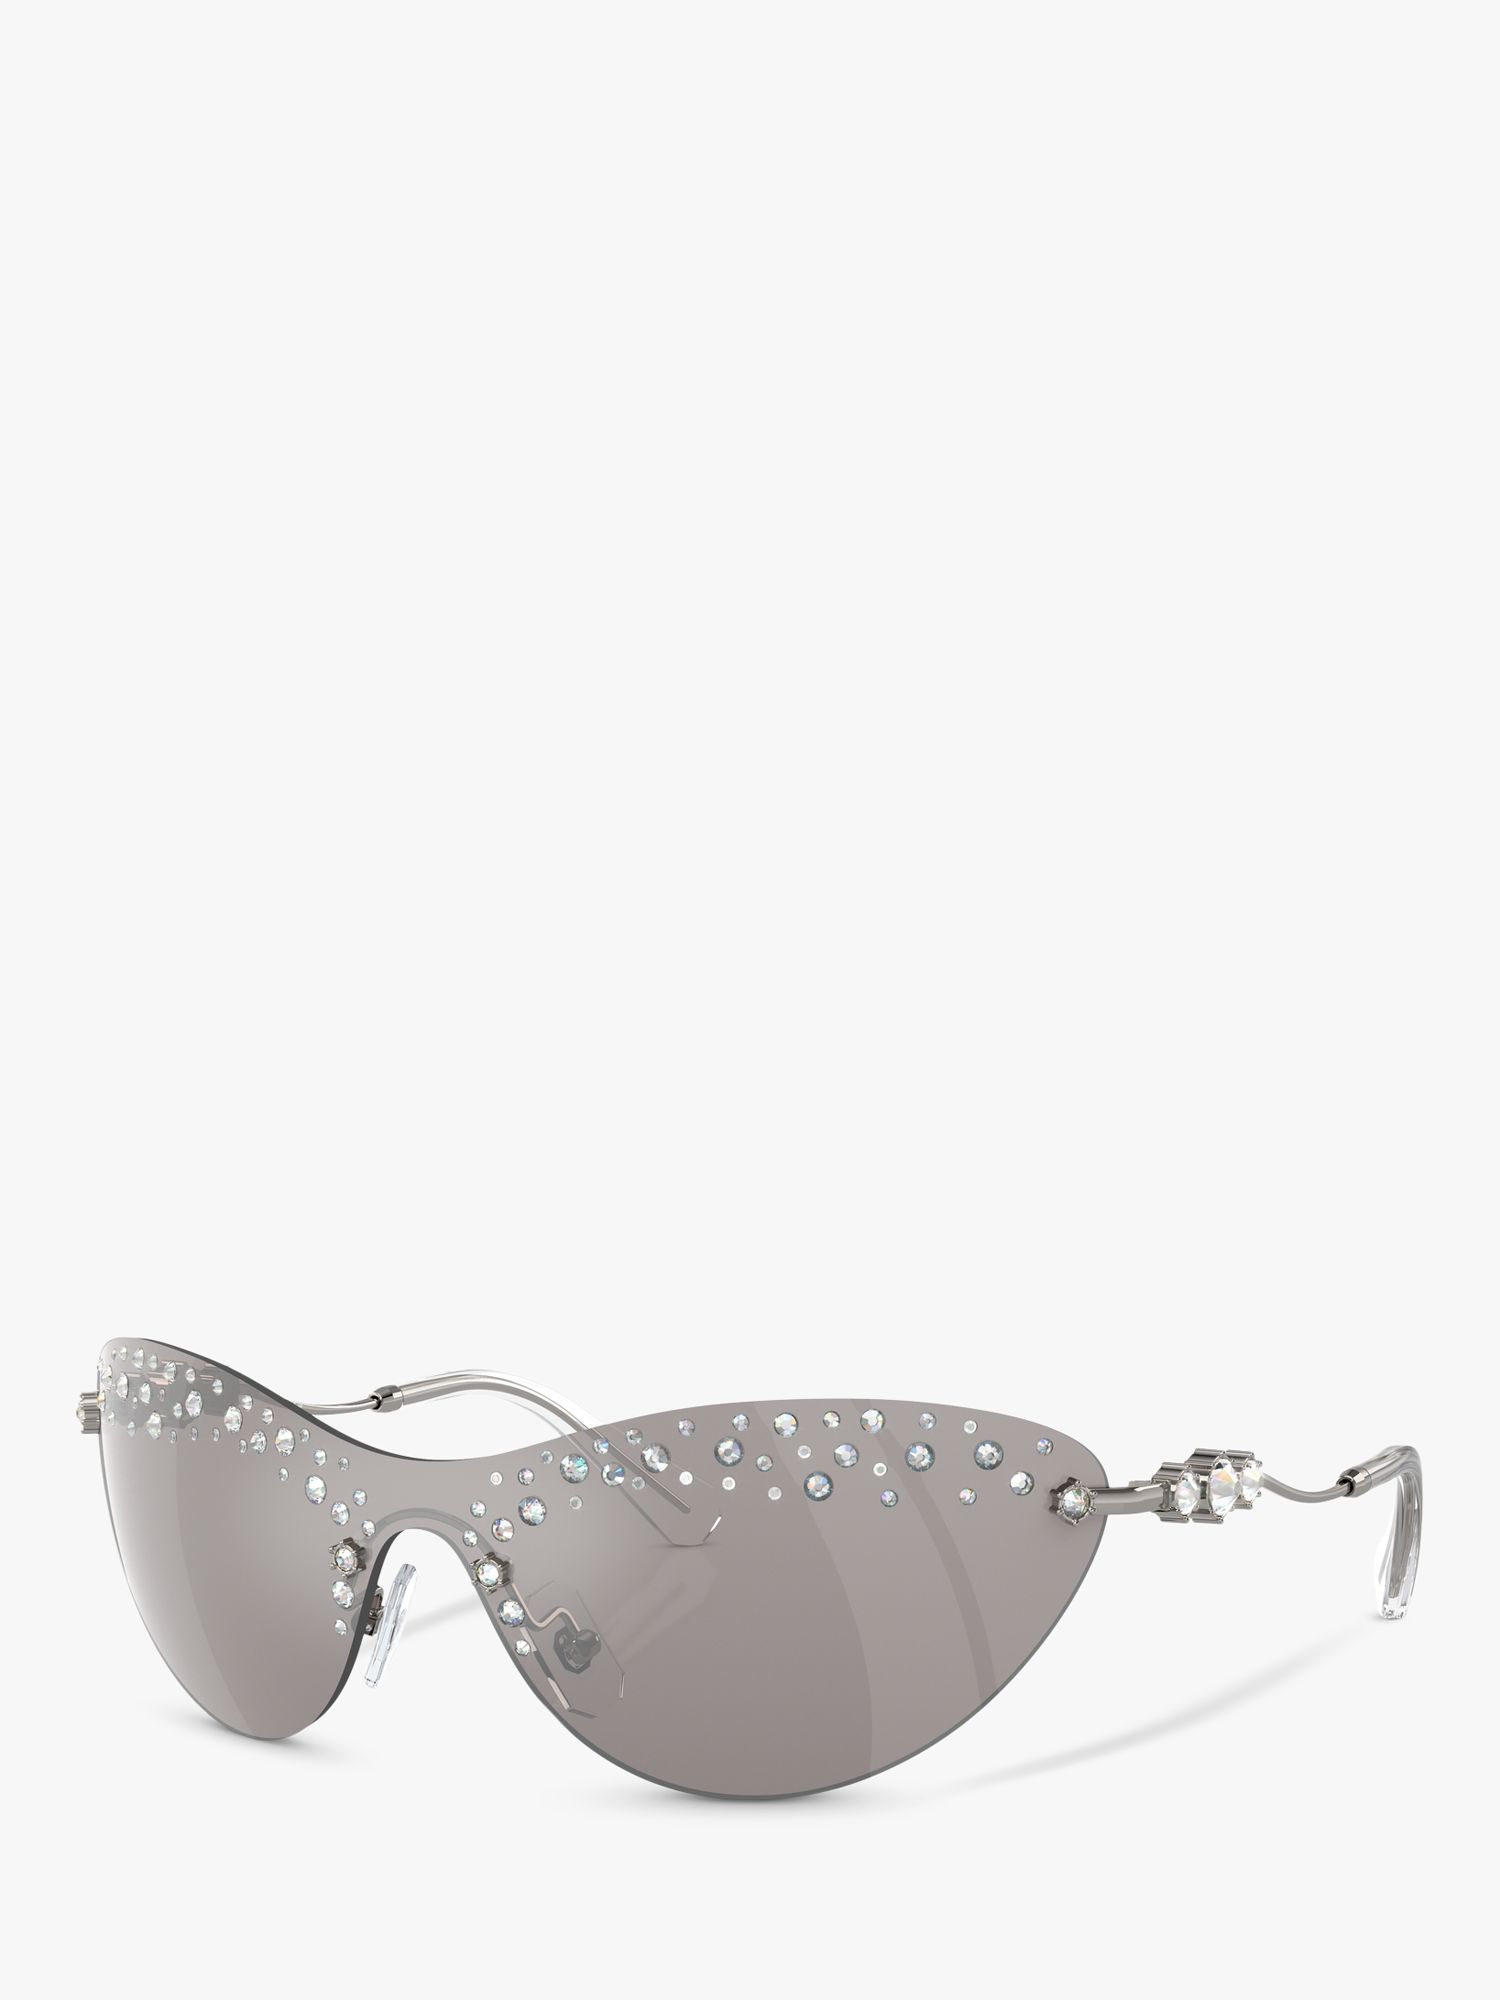 Swarovski SK7023 Women's Wrap Sunglasses, Gunmetal/Silver Mirror